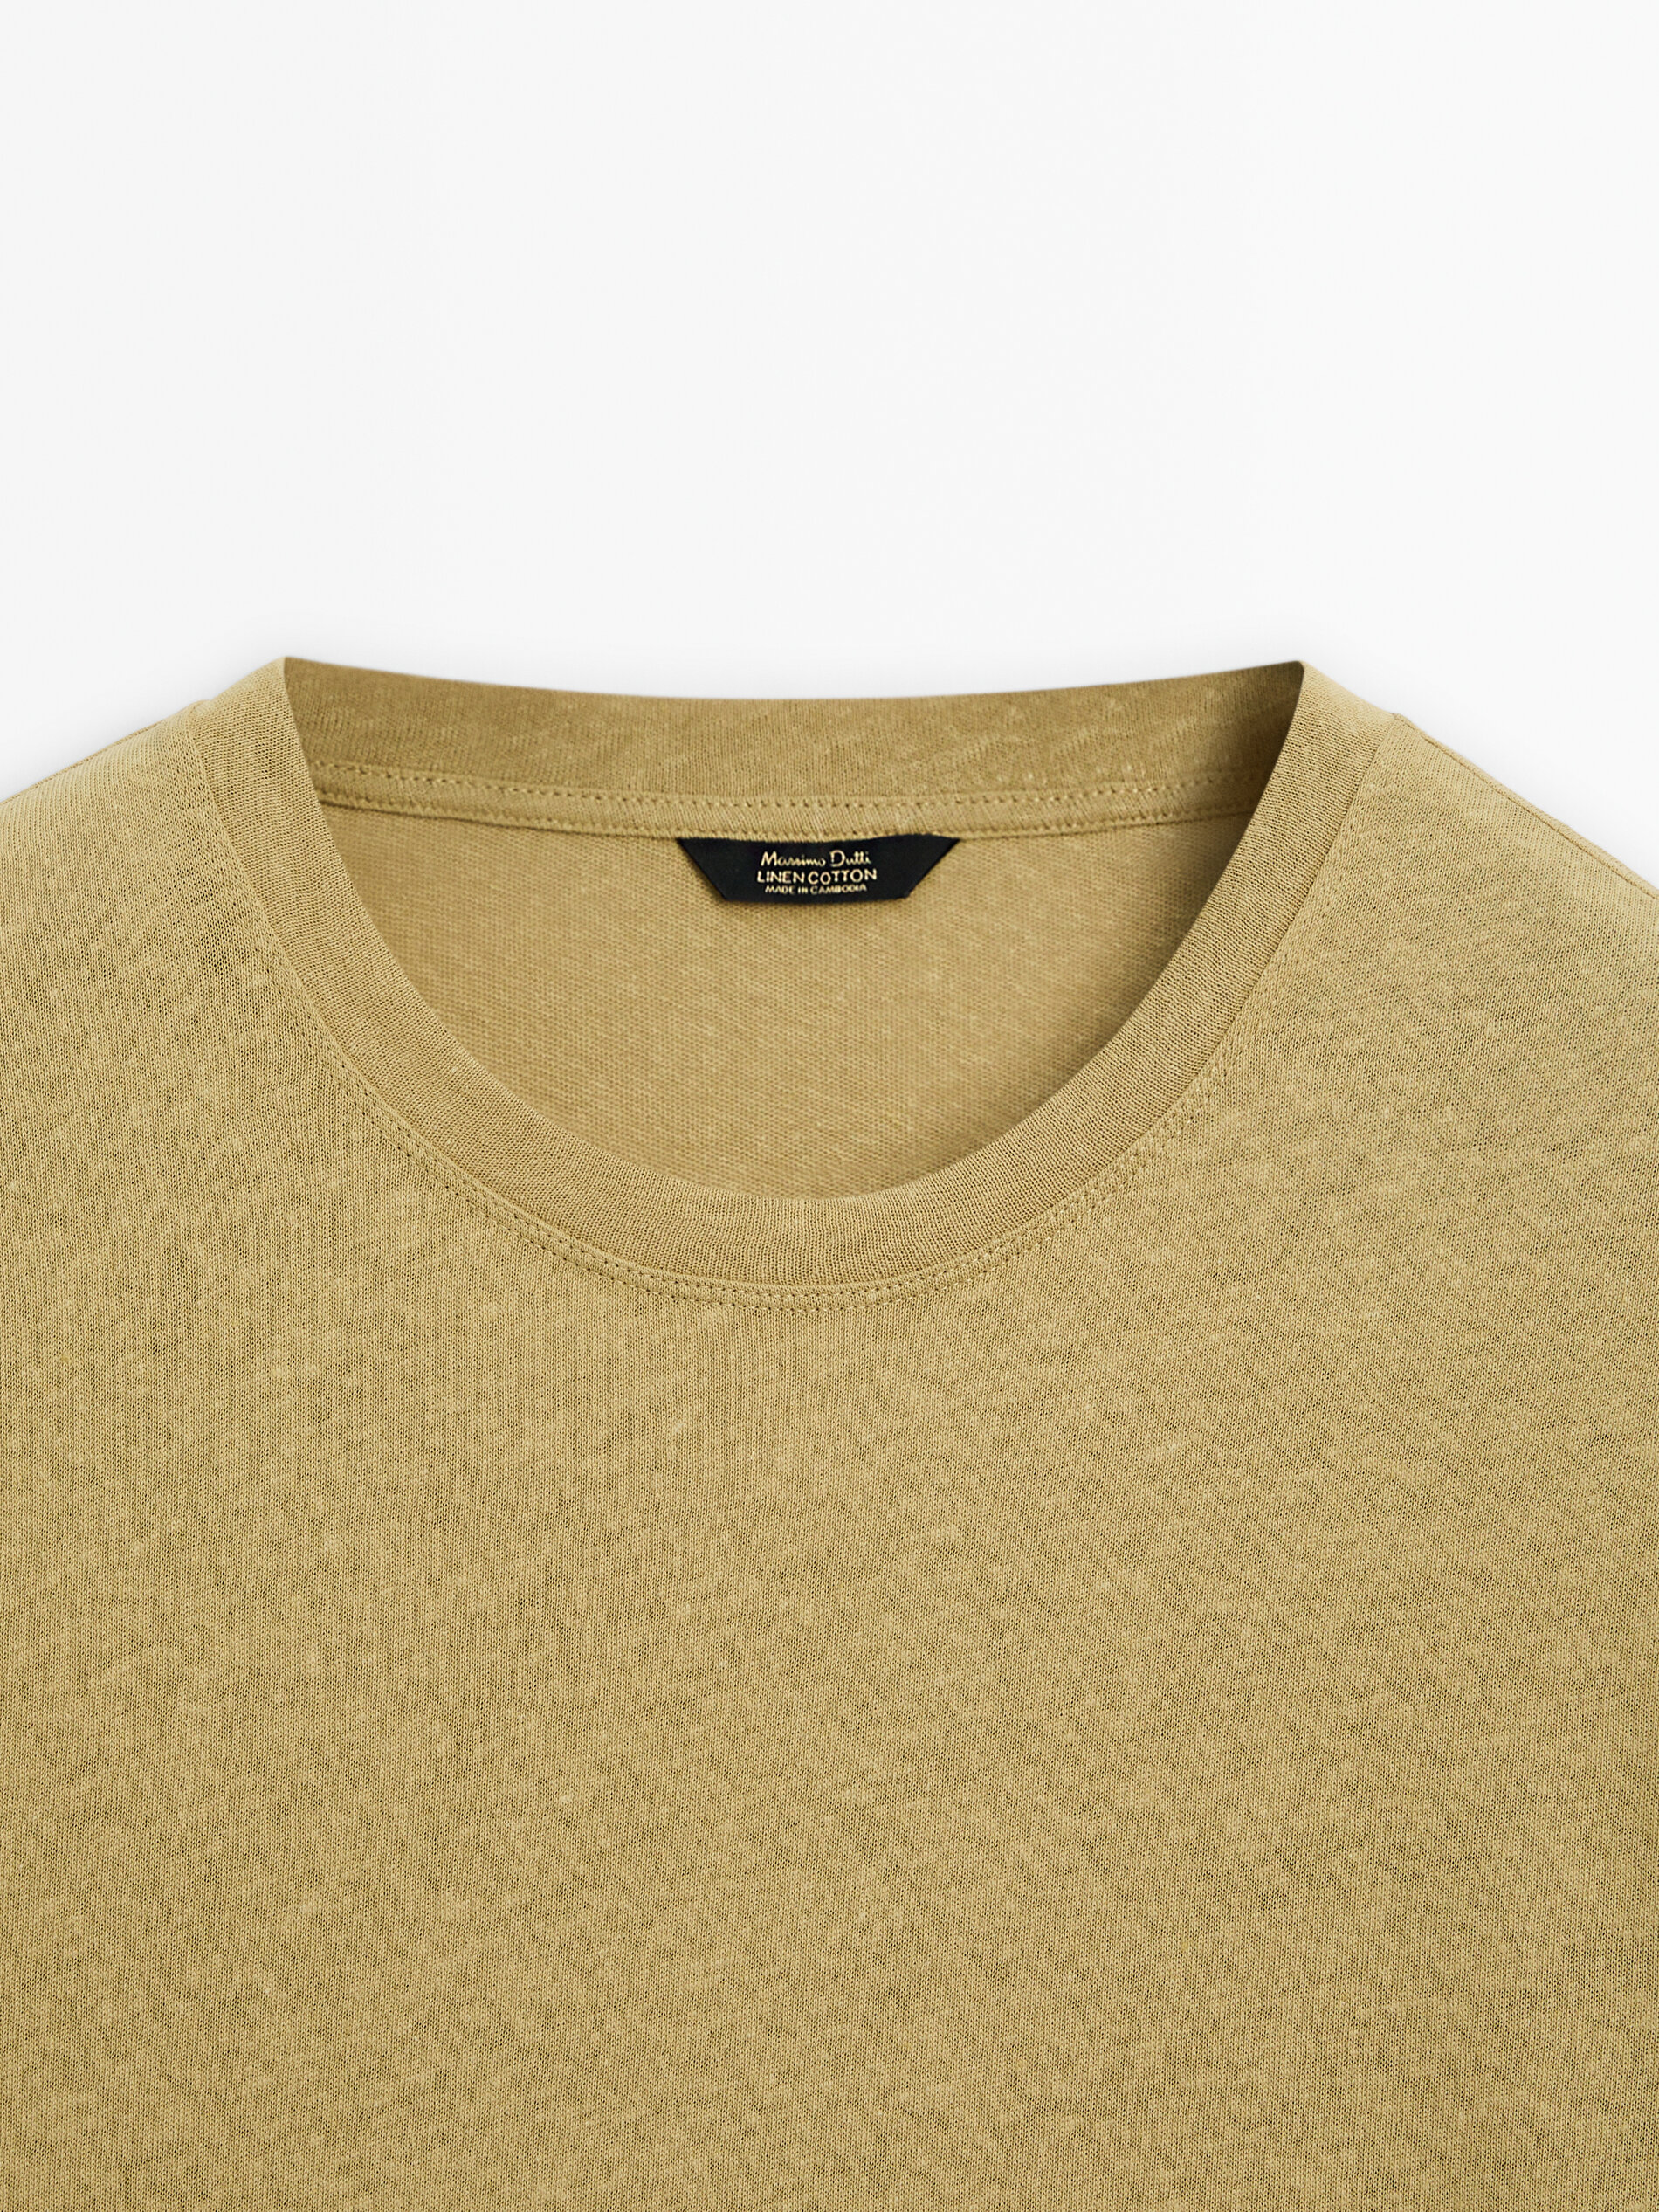 Camiseta manga corta con lino y algodón